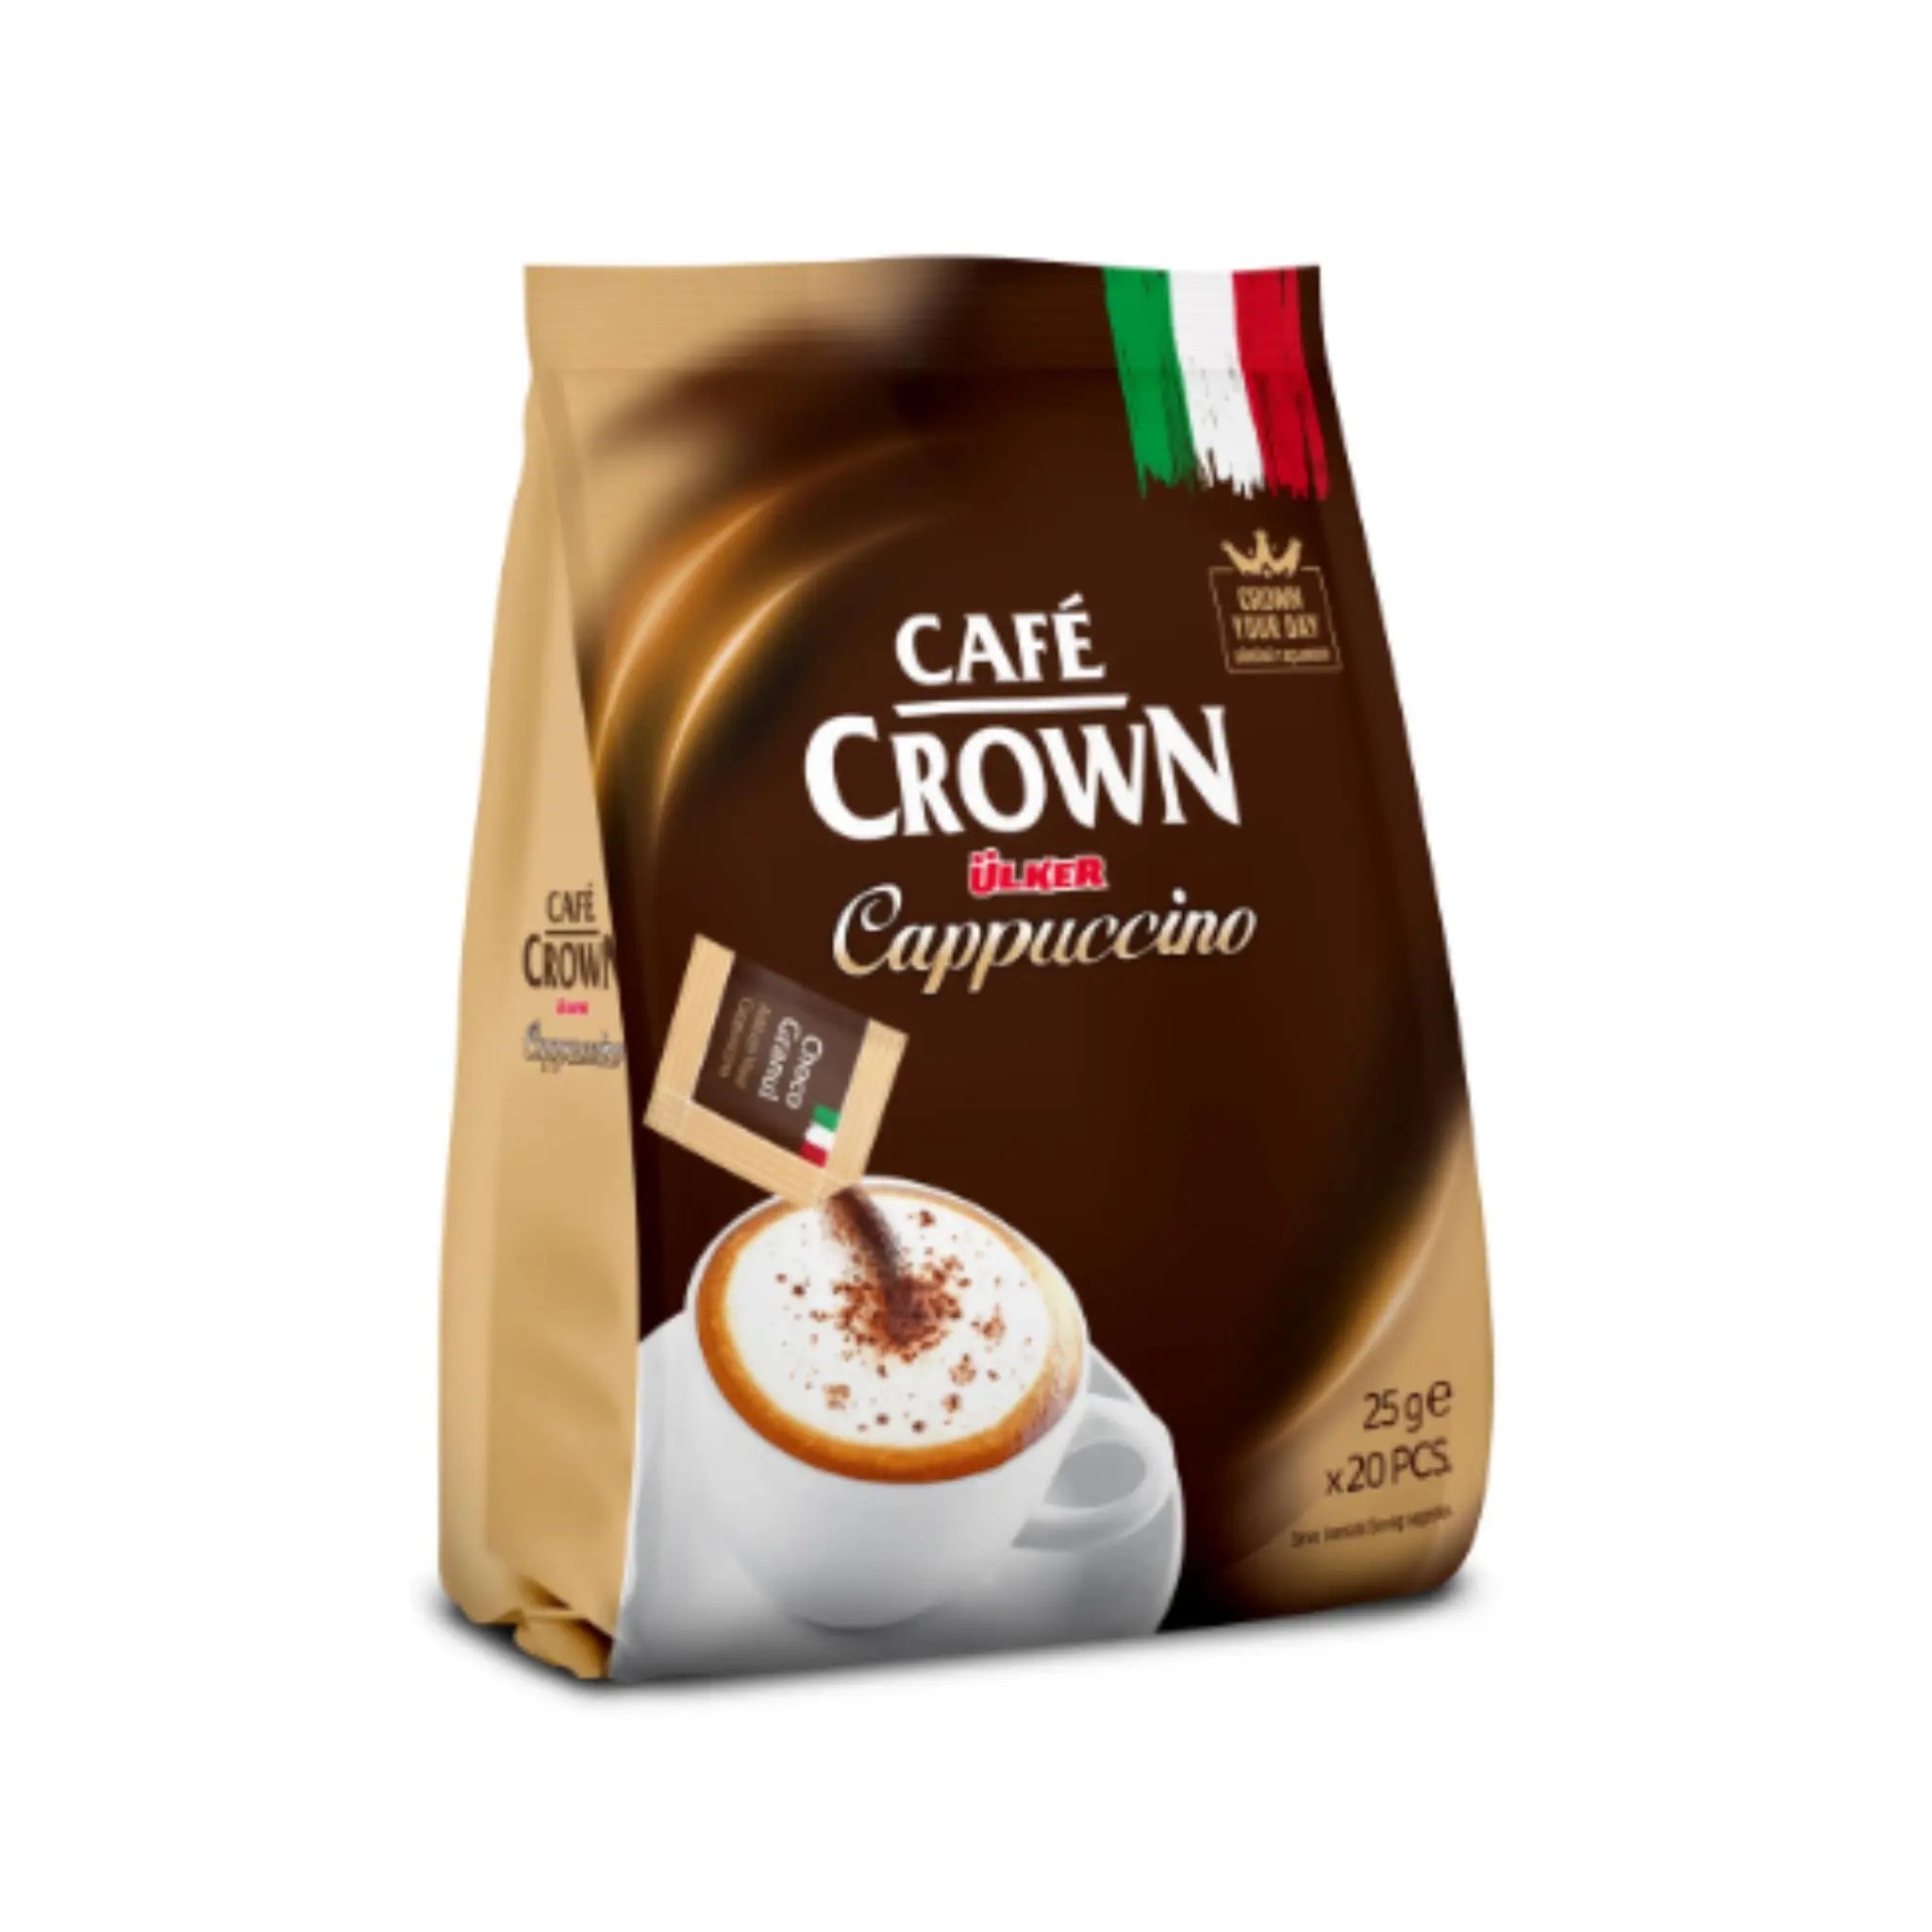 Café Crown Cappuccino 25g - 12x20x25g (1 carton) - Marino.AE